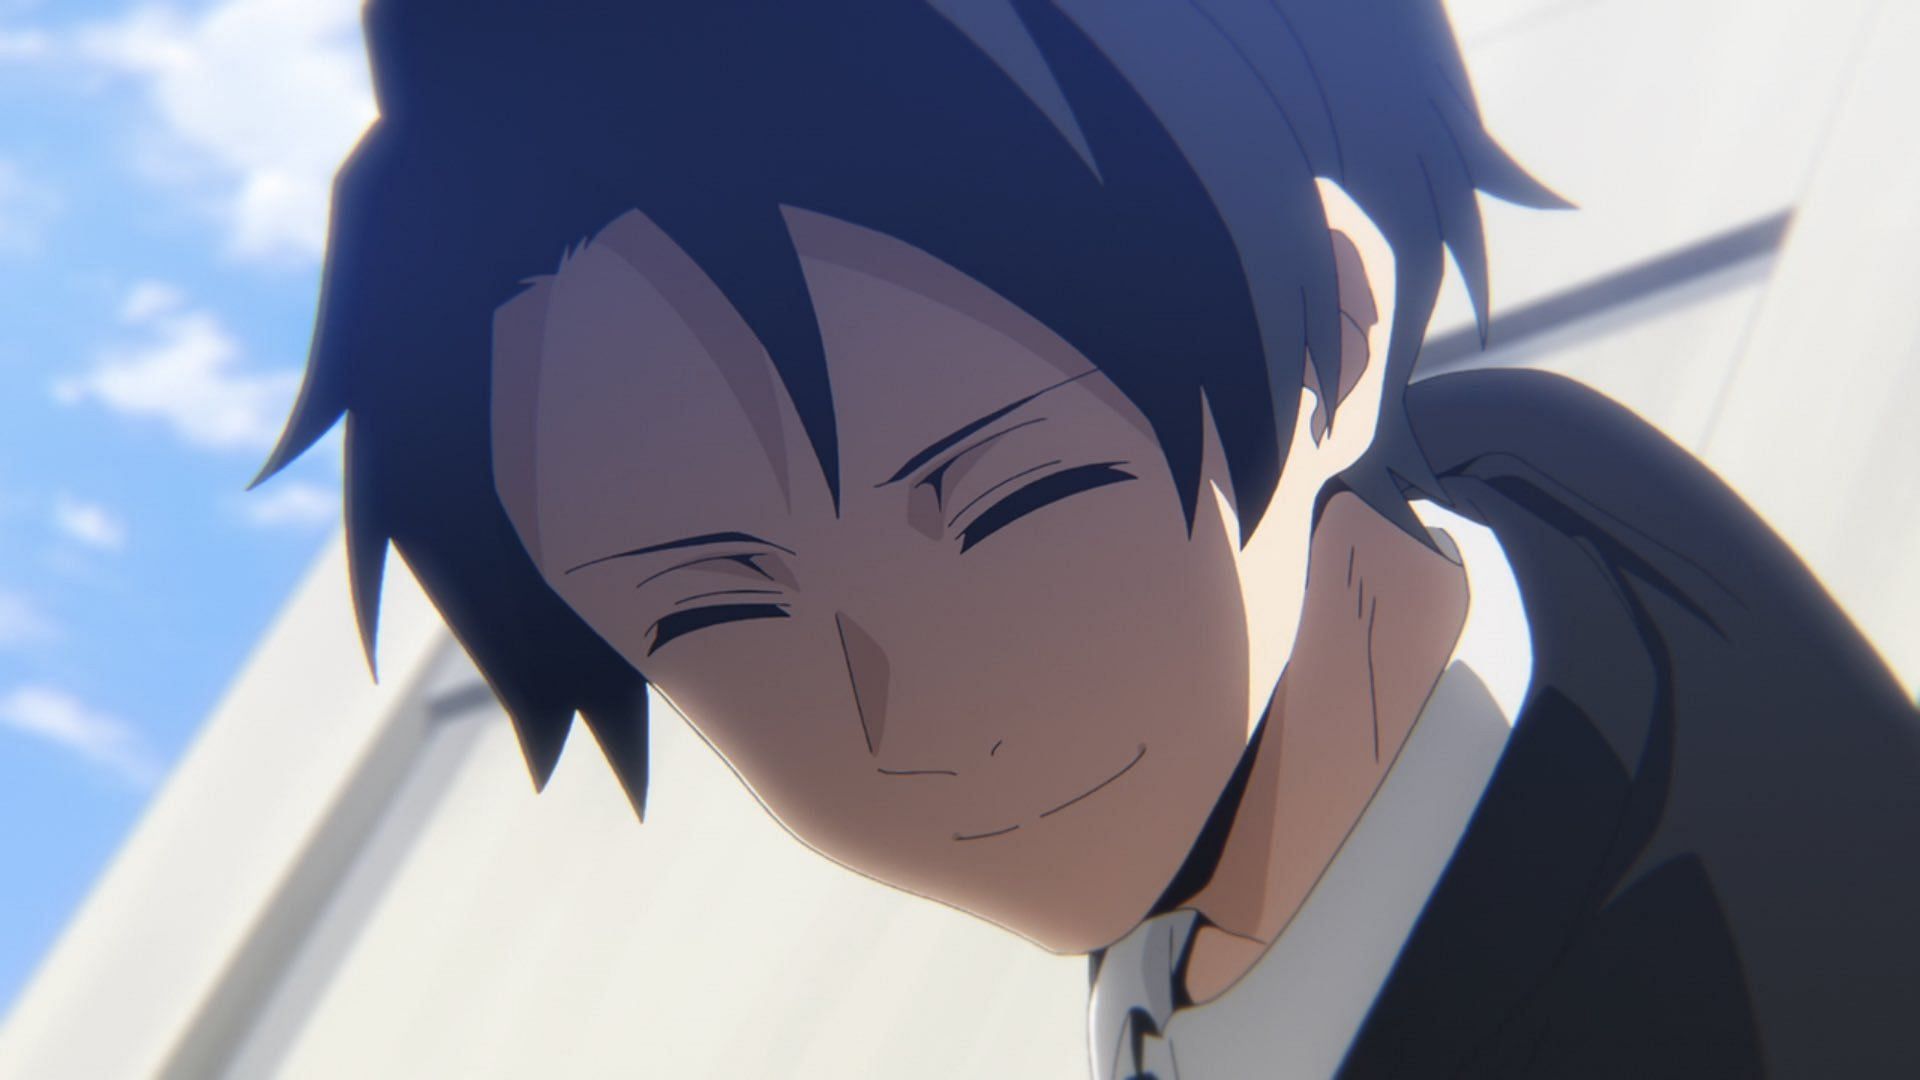 Kyoichiro Yozakura, as seen in the anime (Image via Silver Link)